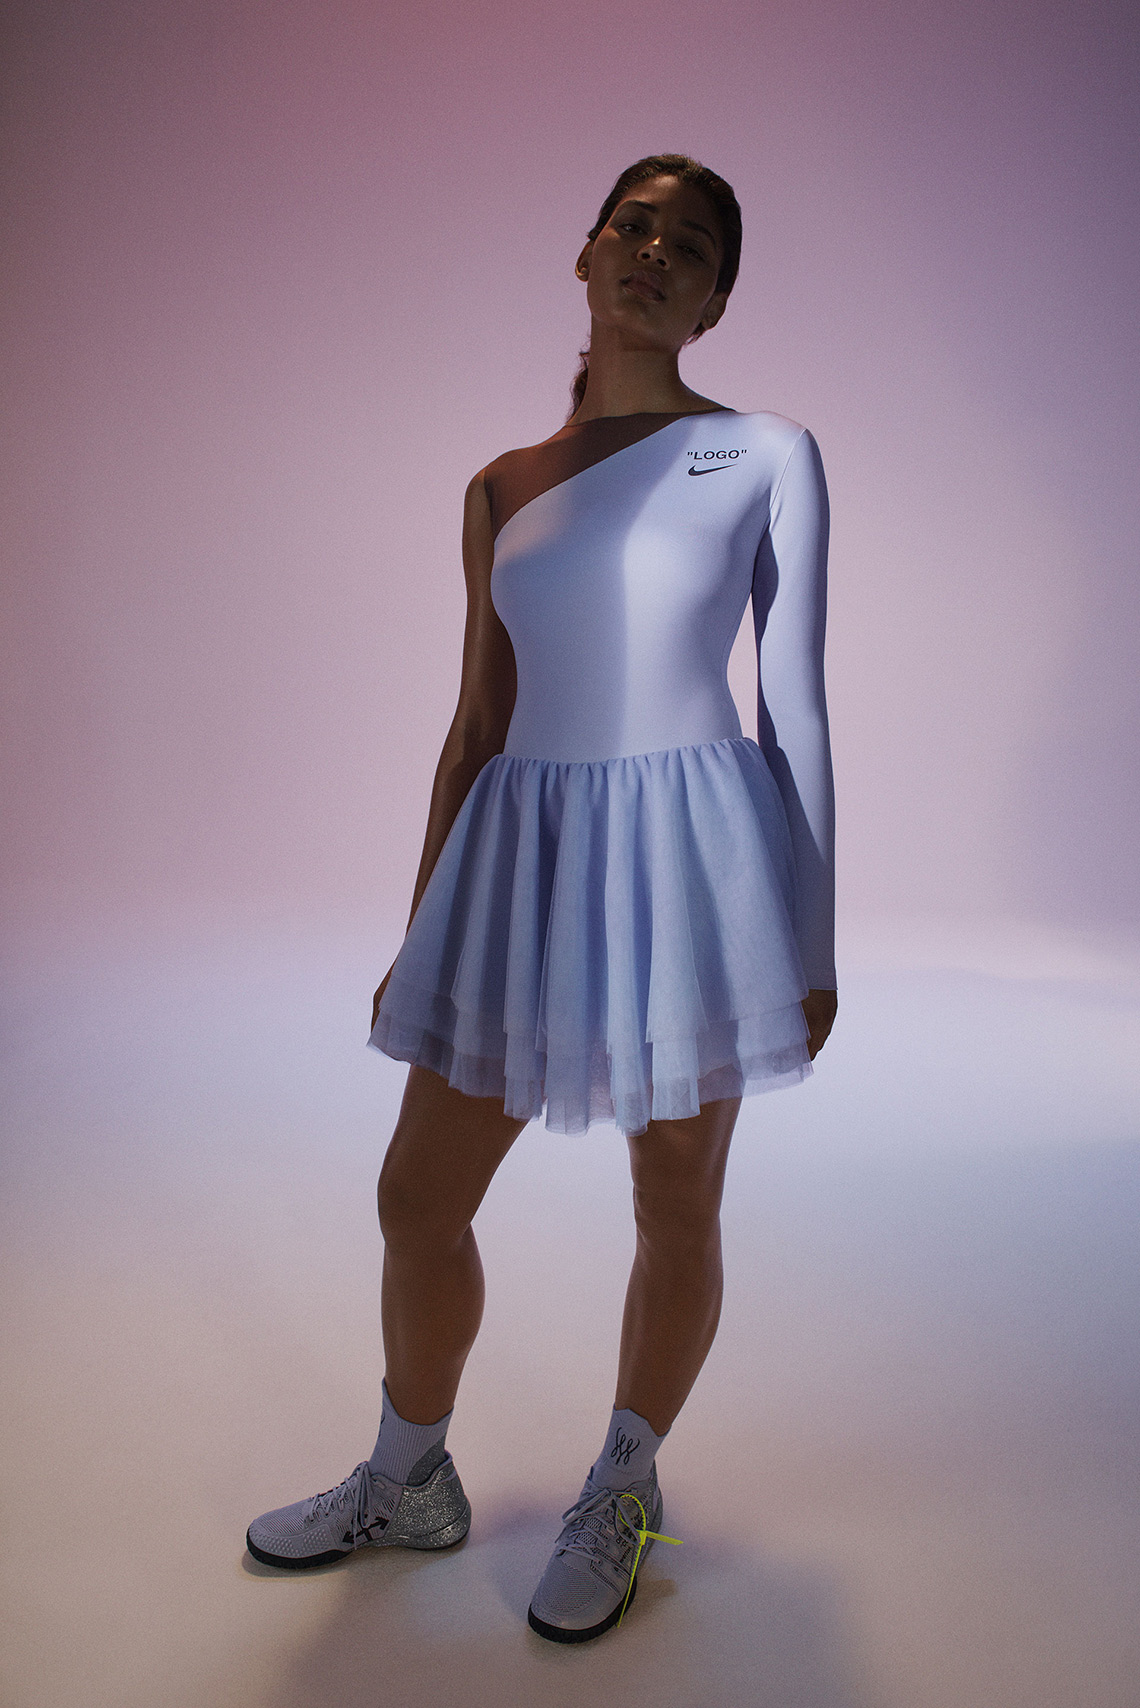 Serena Williams Virgil Abloh Nike Nikecourt Dress Us Open 1